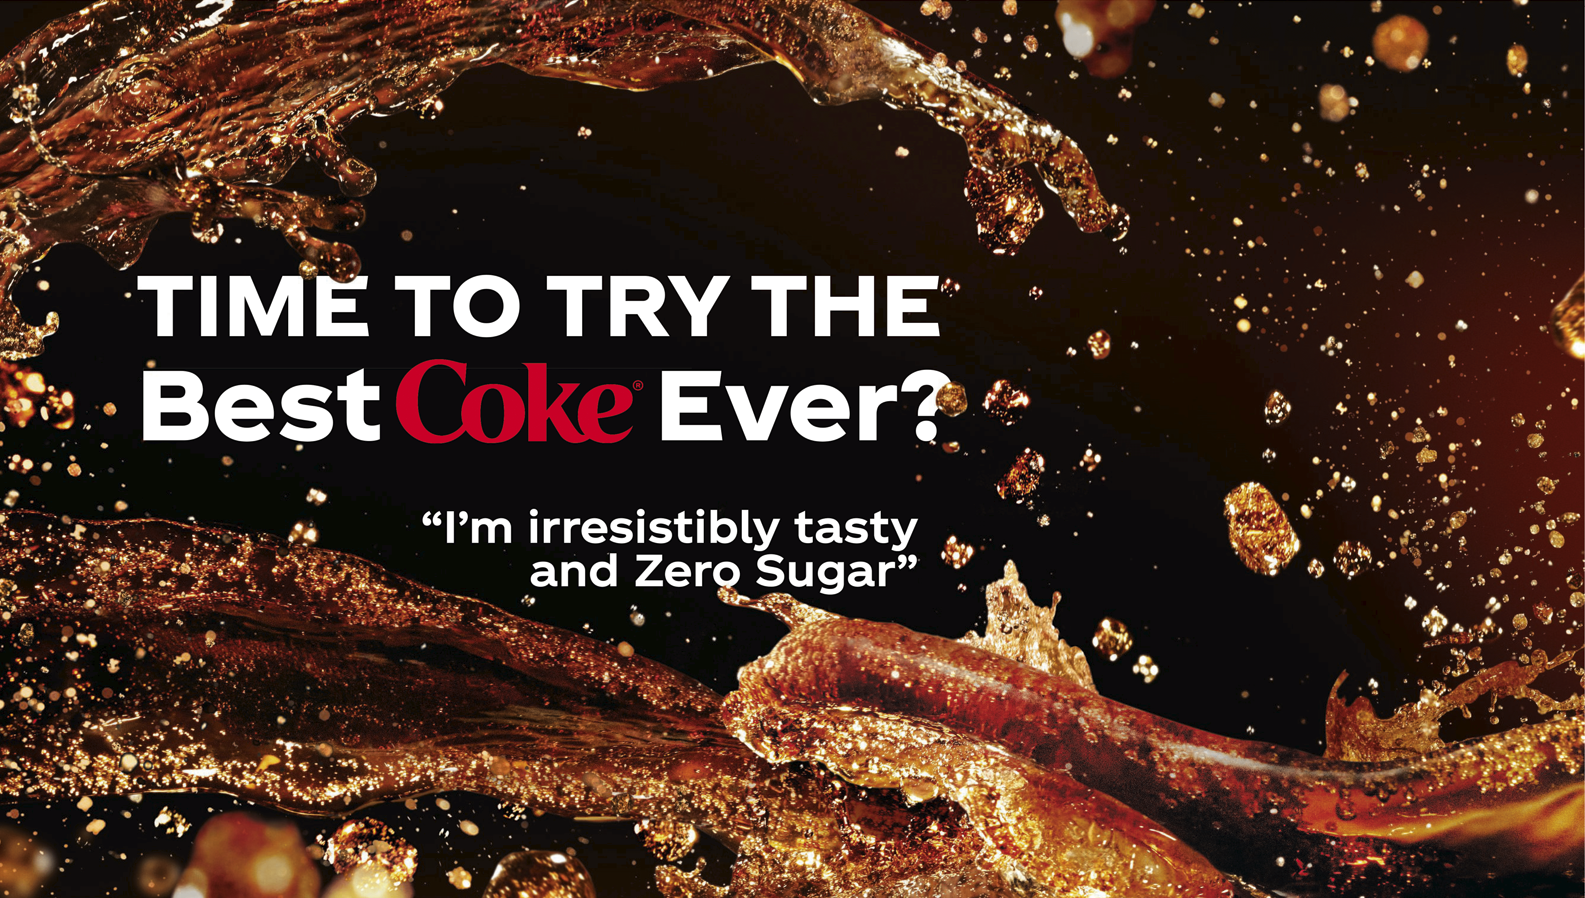 coca-cola zero sugar baner sa crvenom pozadinom, limenkom i crnim logom